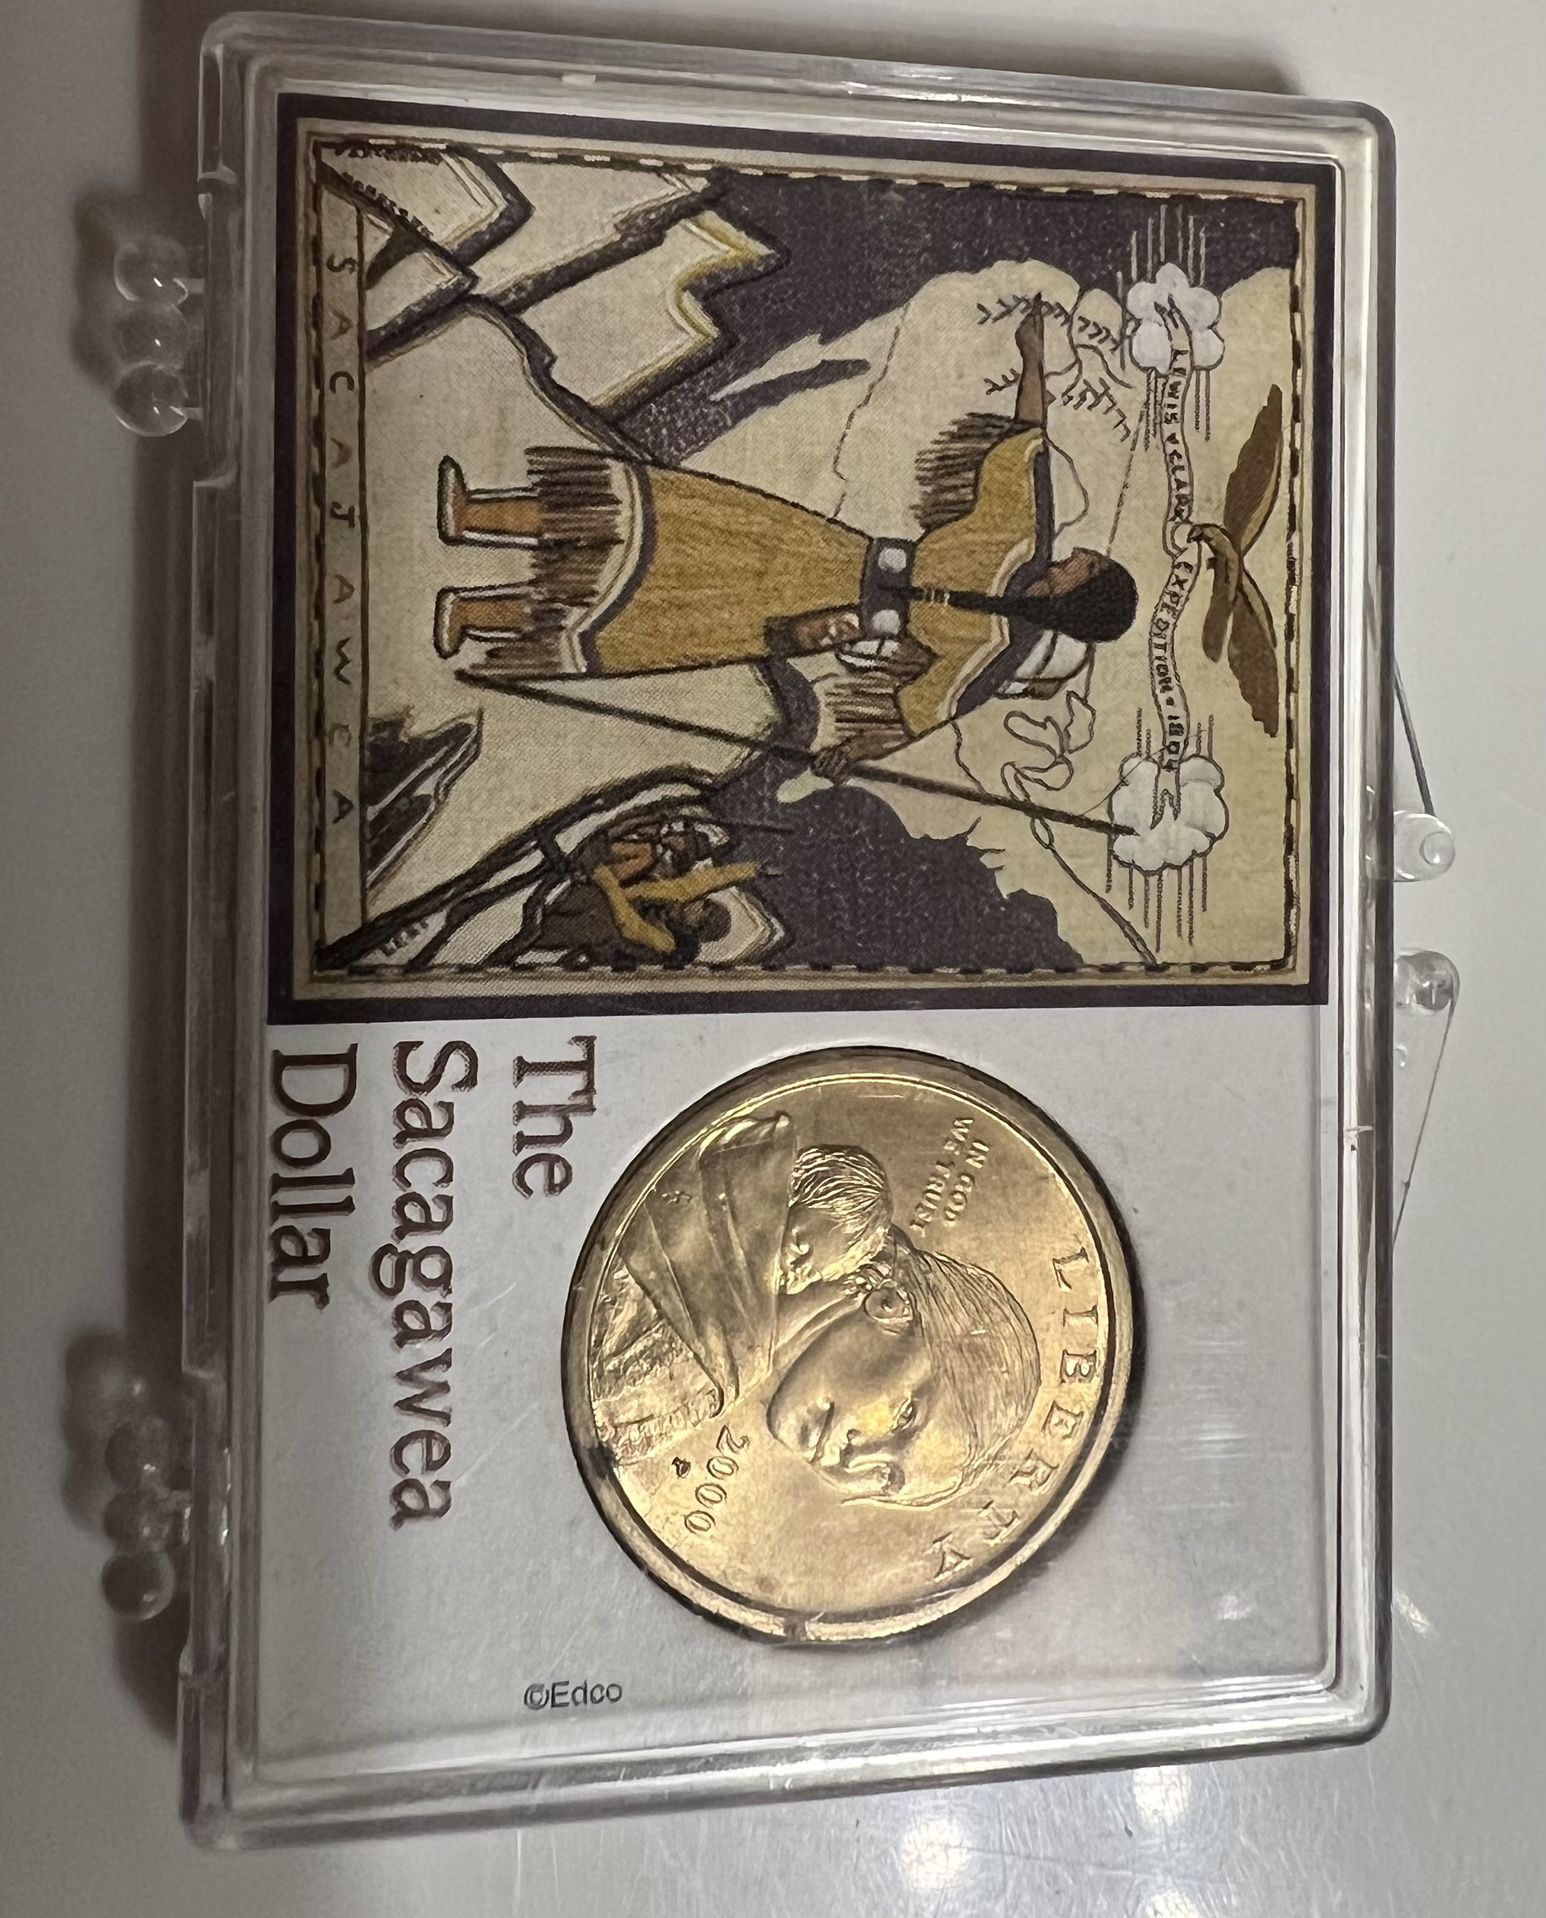 The Sacagawea Dollar 